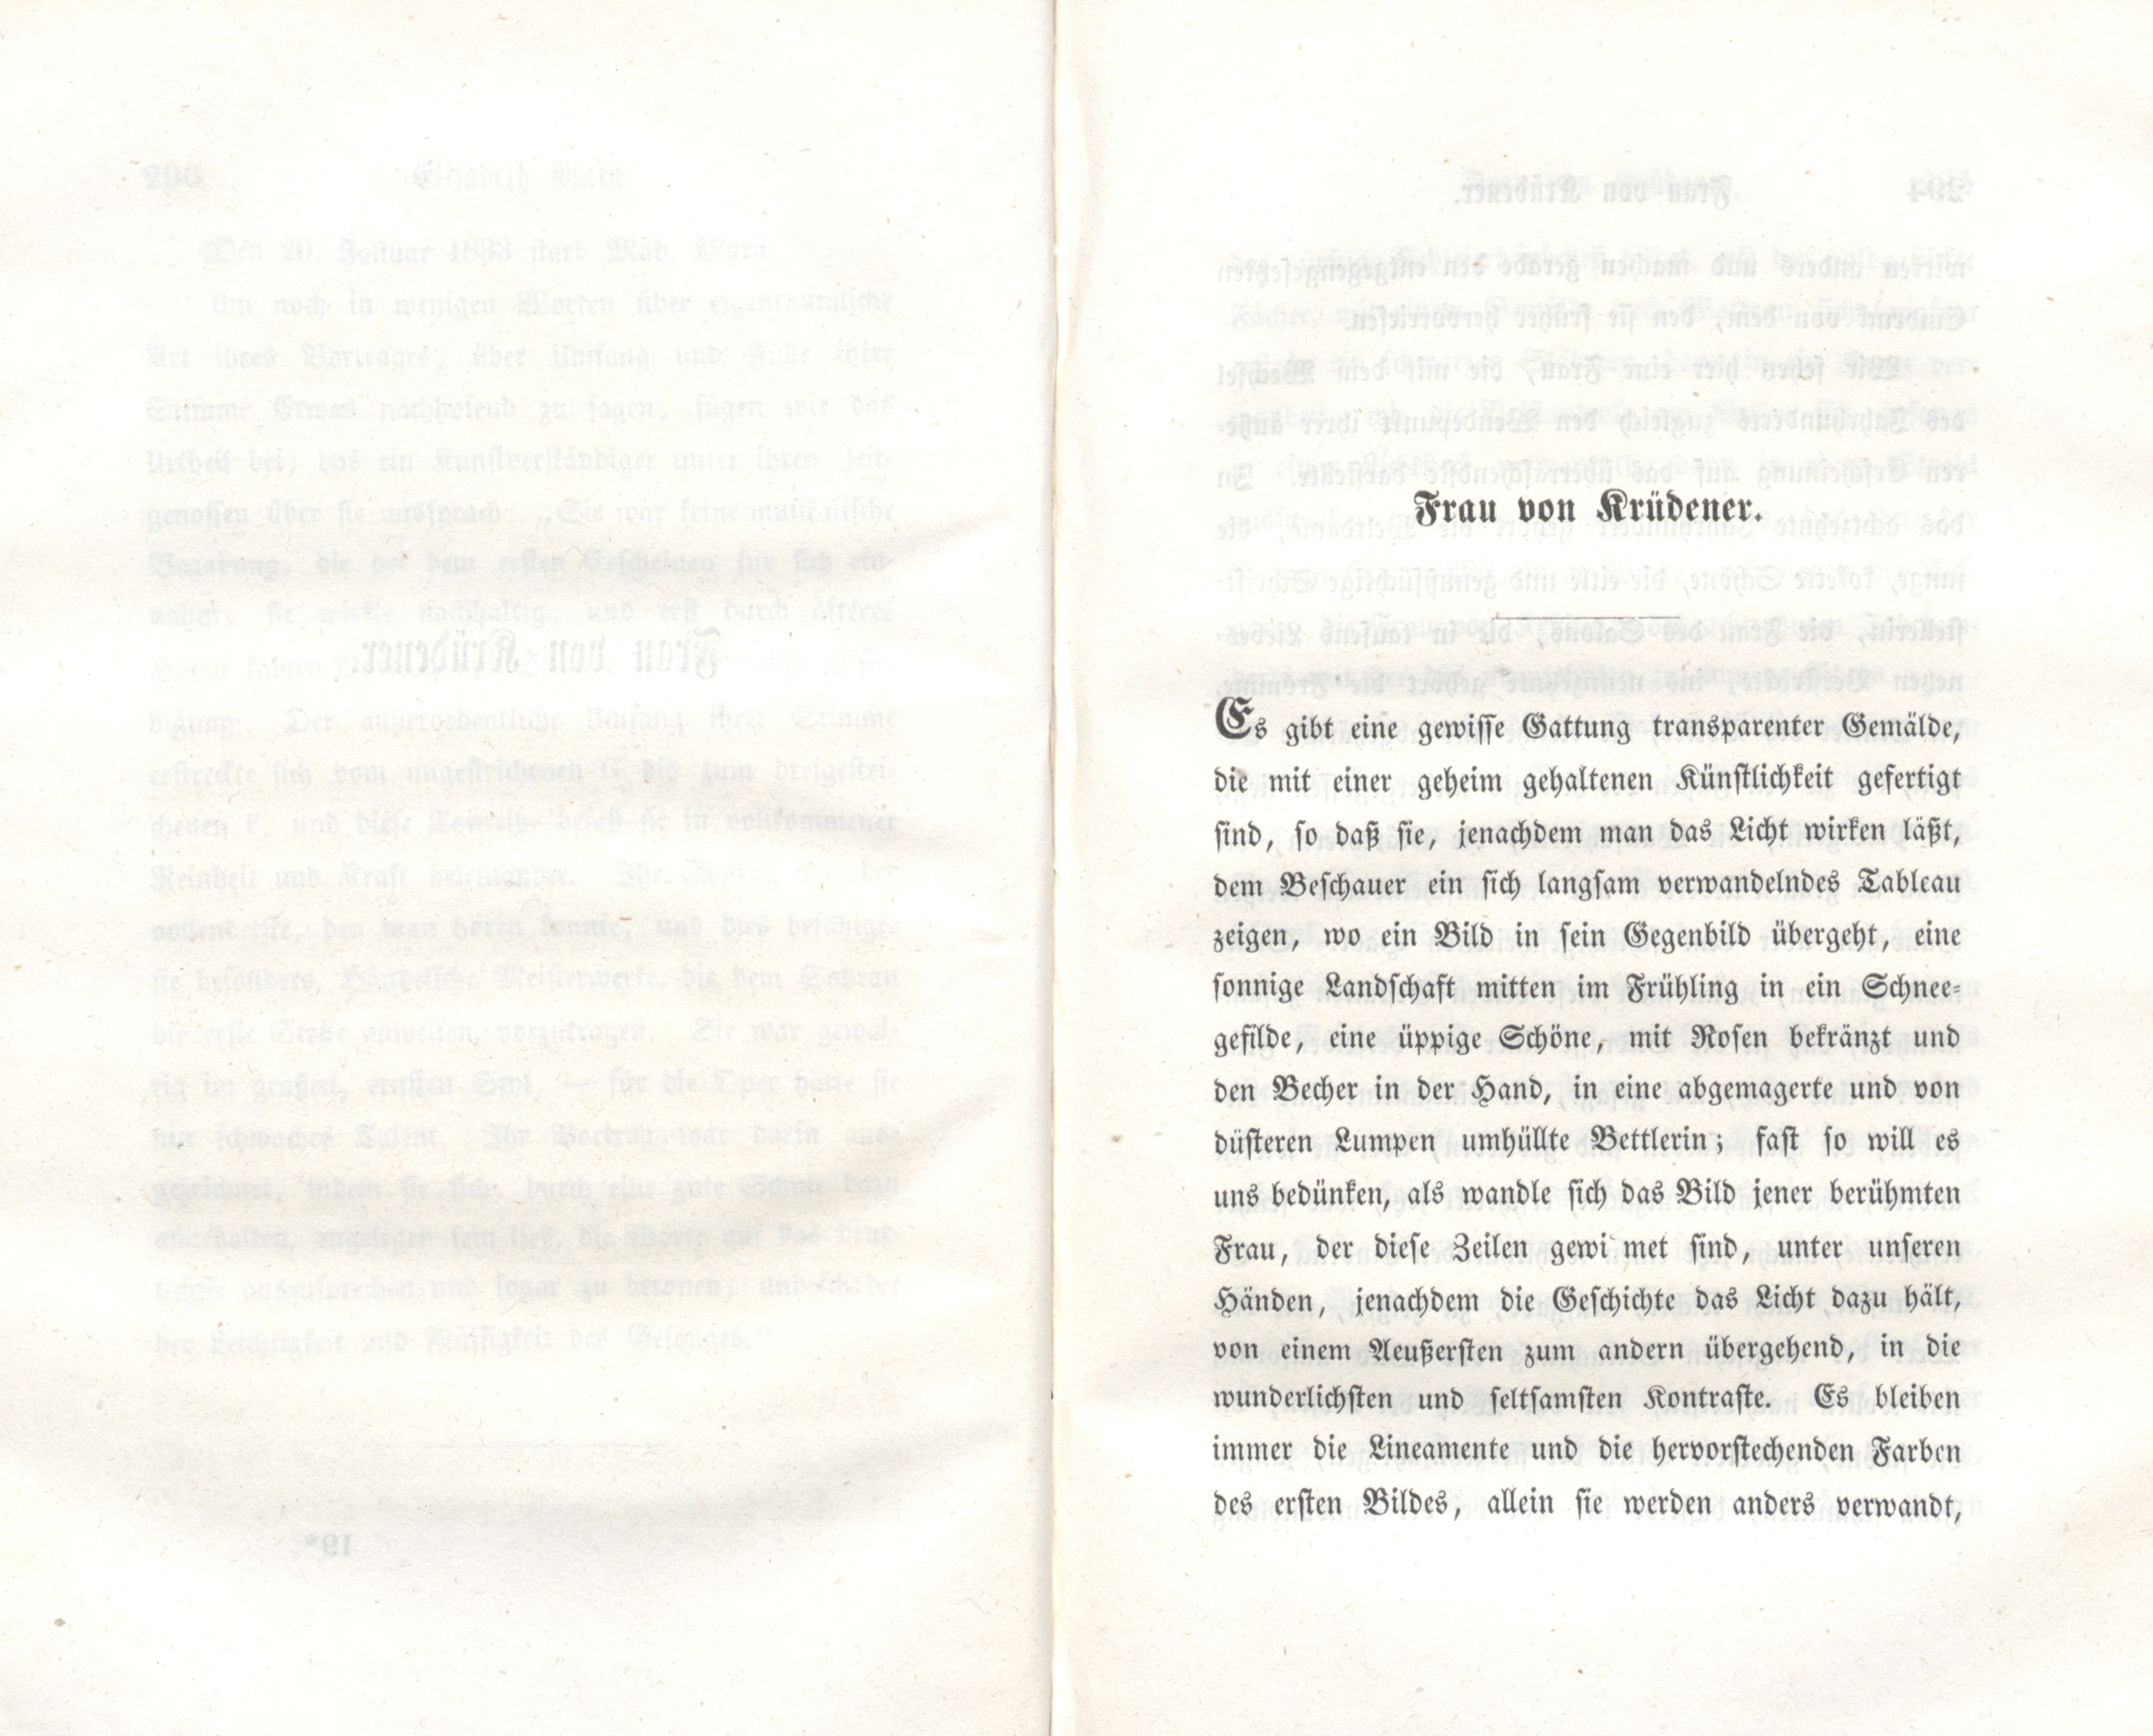 Berühmte deutsche Frauen des achtzehnten Jahrhunderts [1] (1848) | 156. (292-293) Main body of text